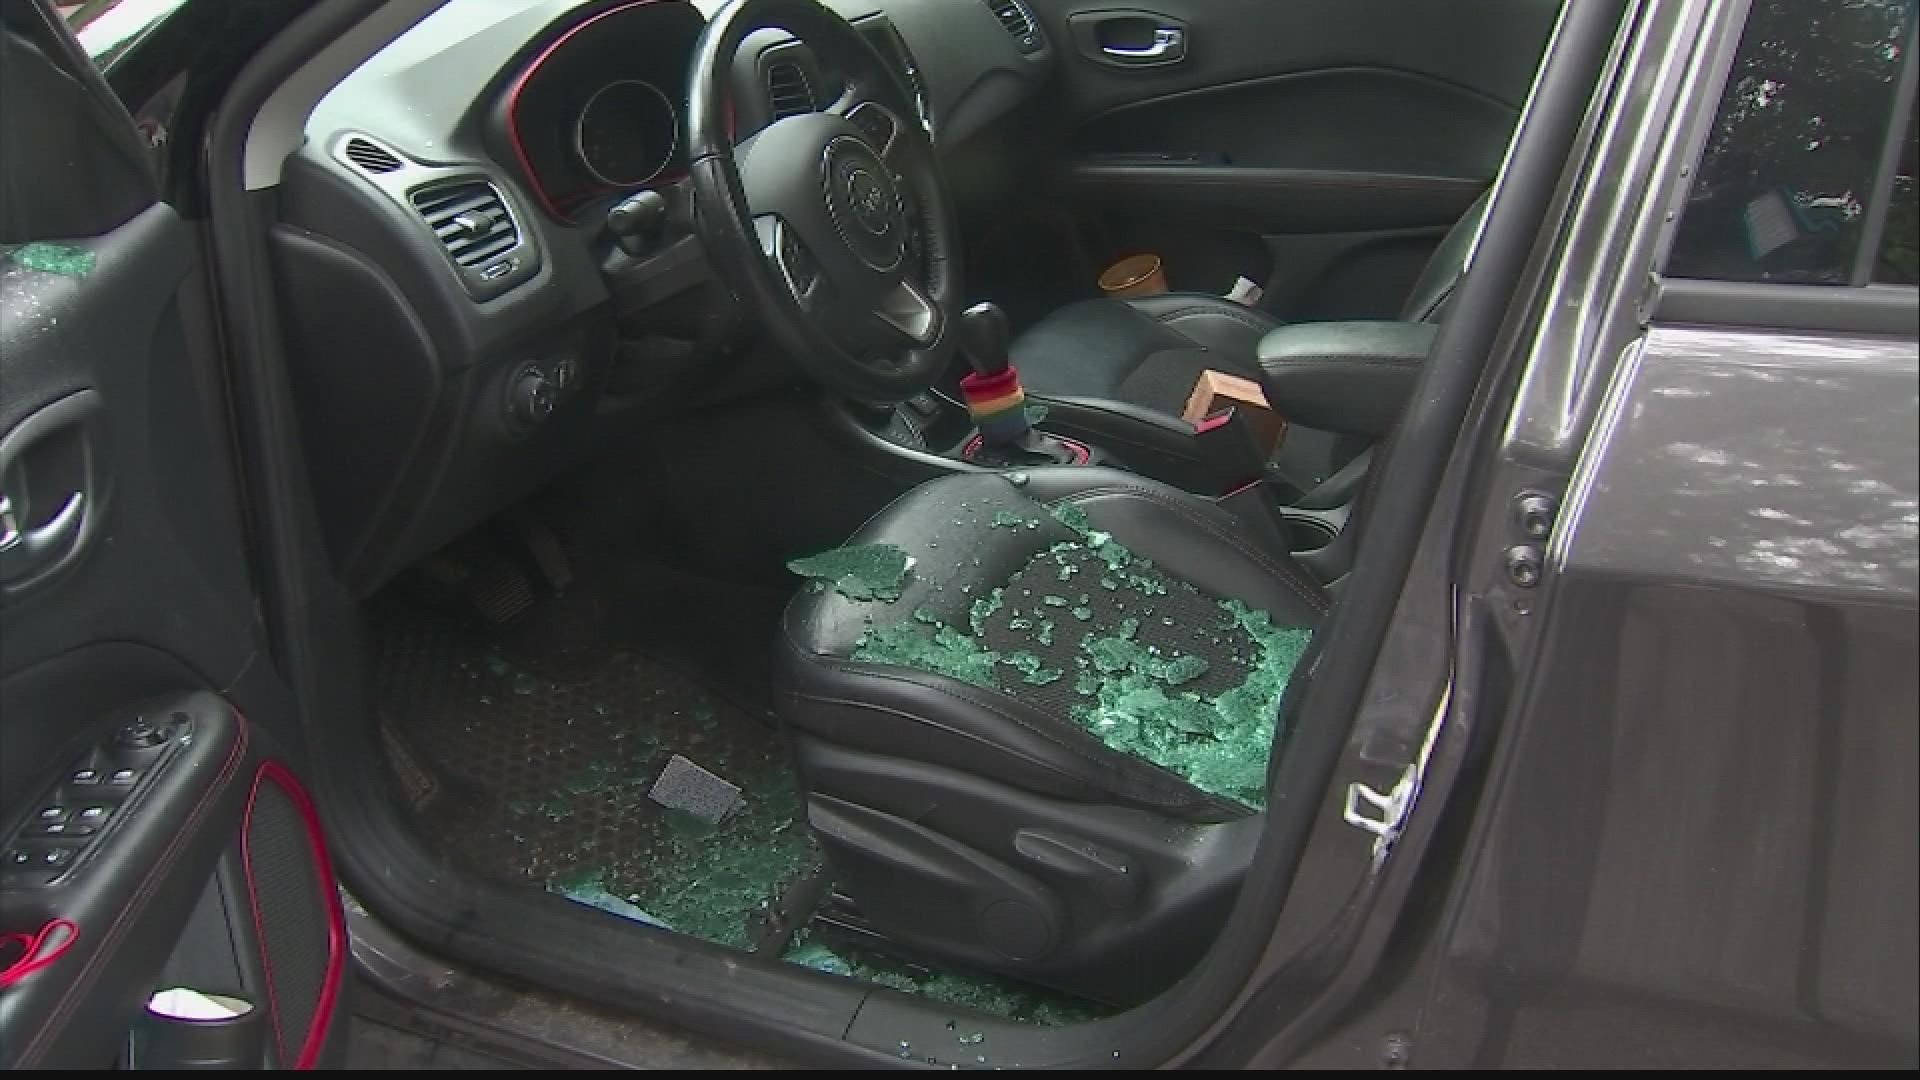 Atlanta Police responded to Vedado Way on Sunday morning where 18 vehicles "sustained damaged windows," they said.